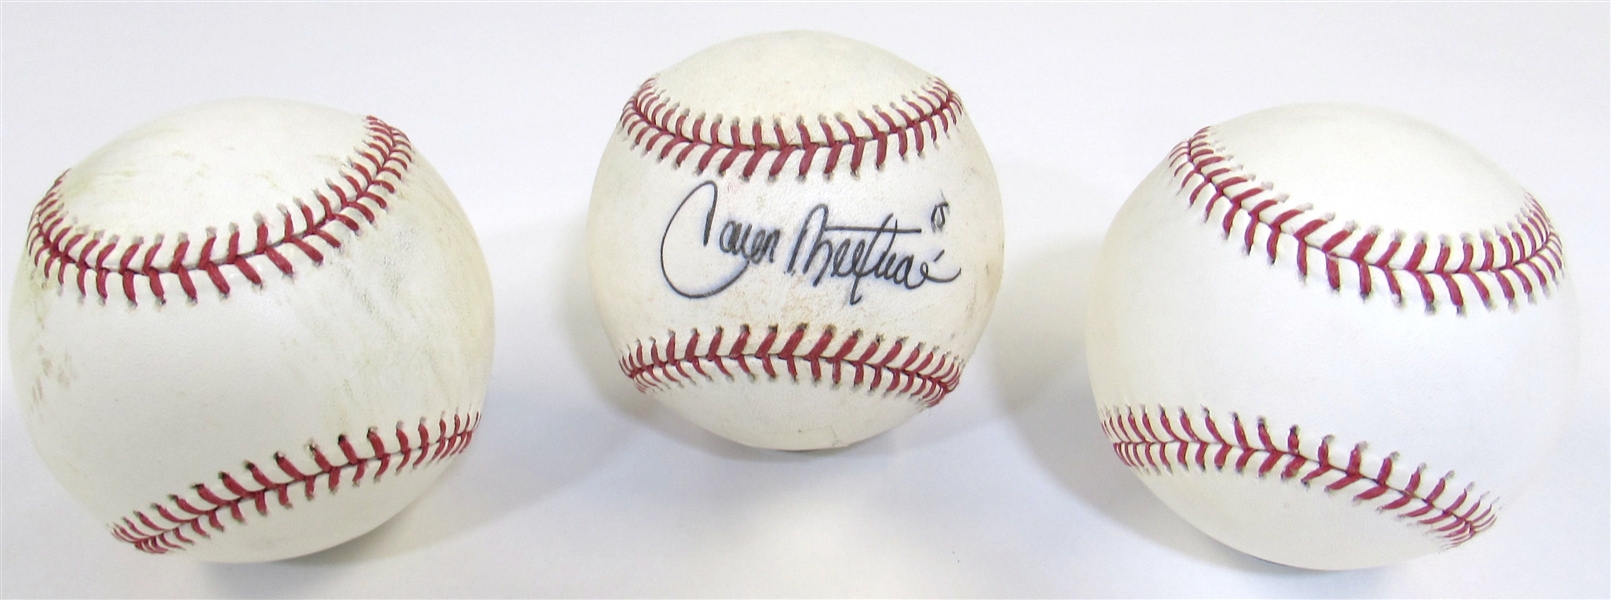 Lot of 3 2009 World Baseball Classic Balls 1-Signed Carlos Beltran